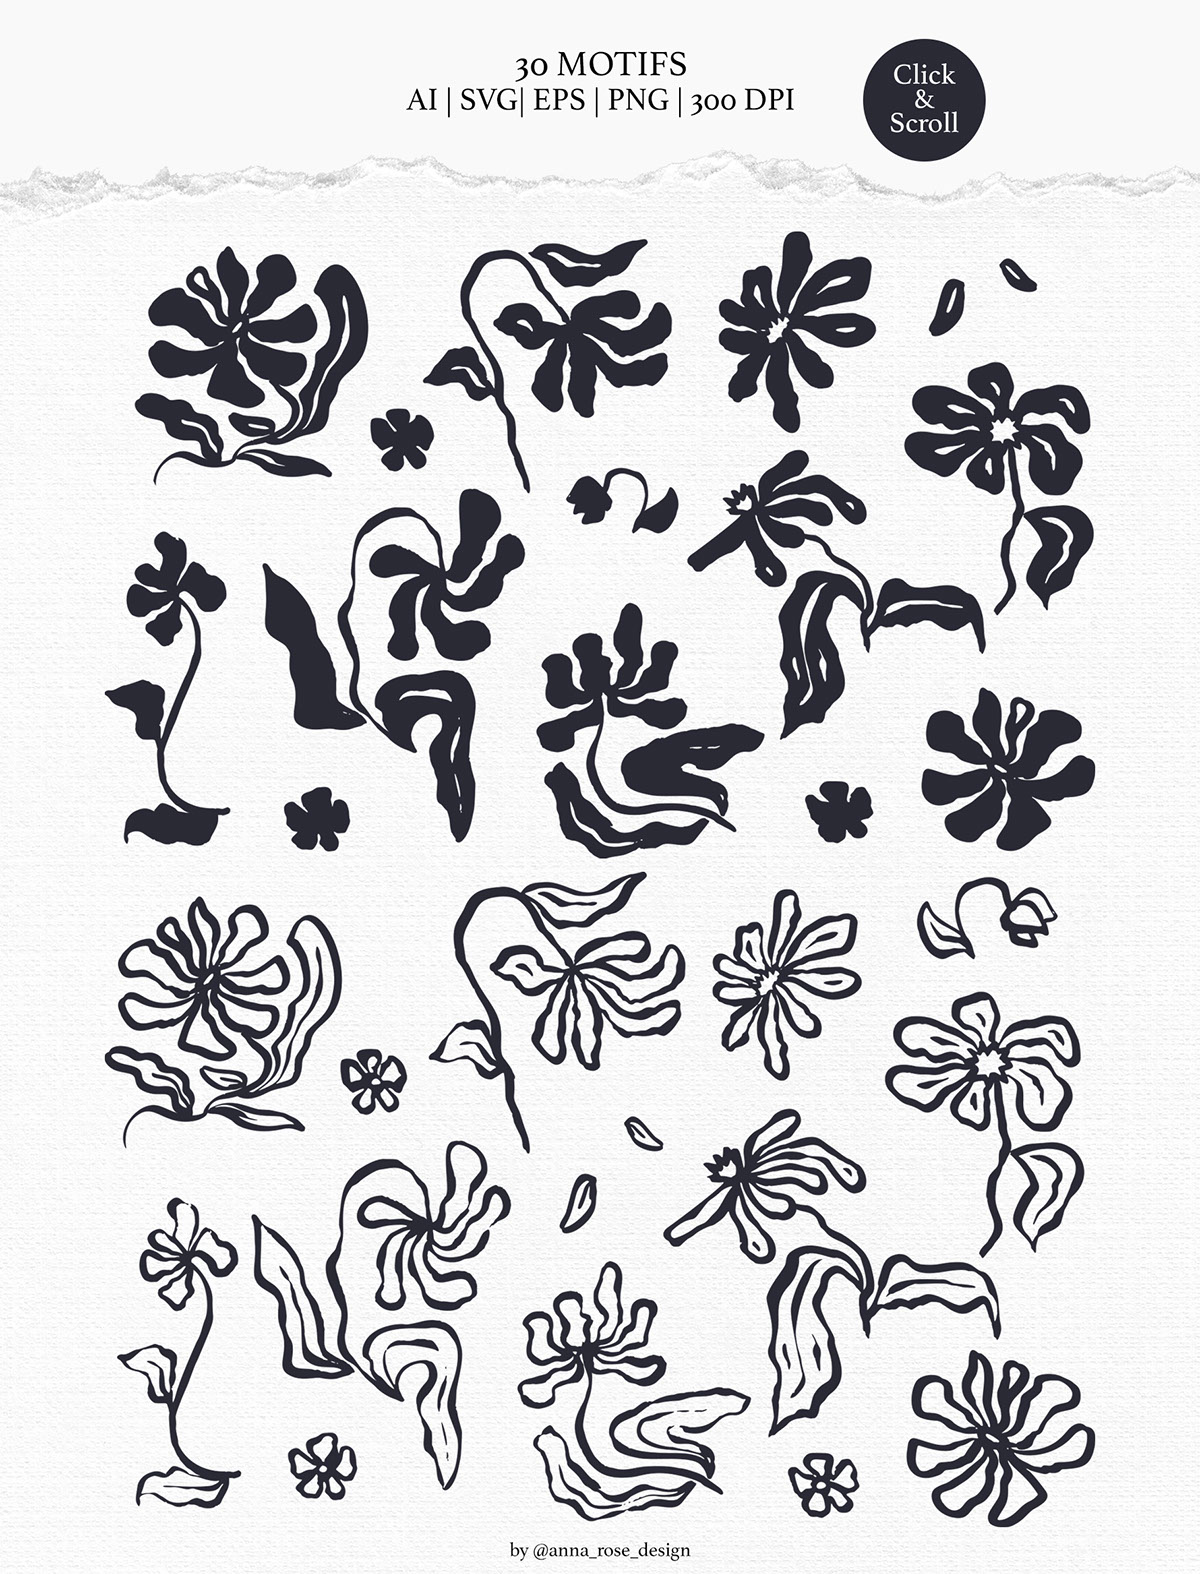 Minimalist Ink Brush Floral Patterns rendition image